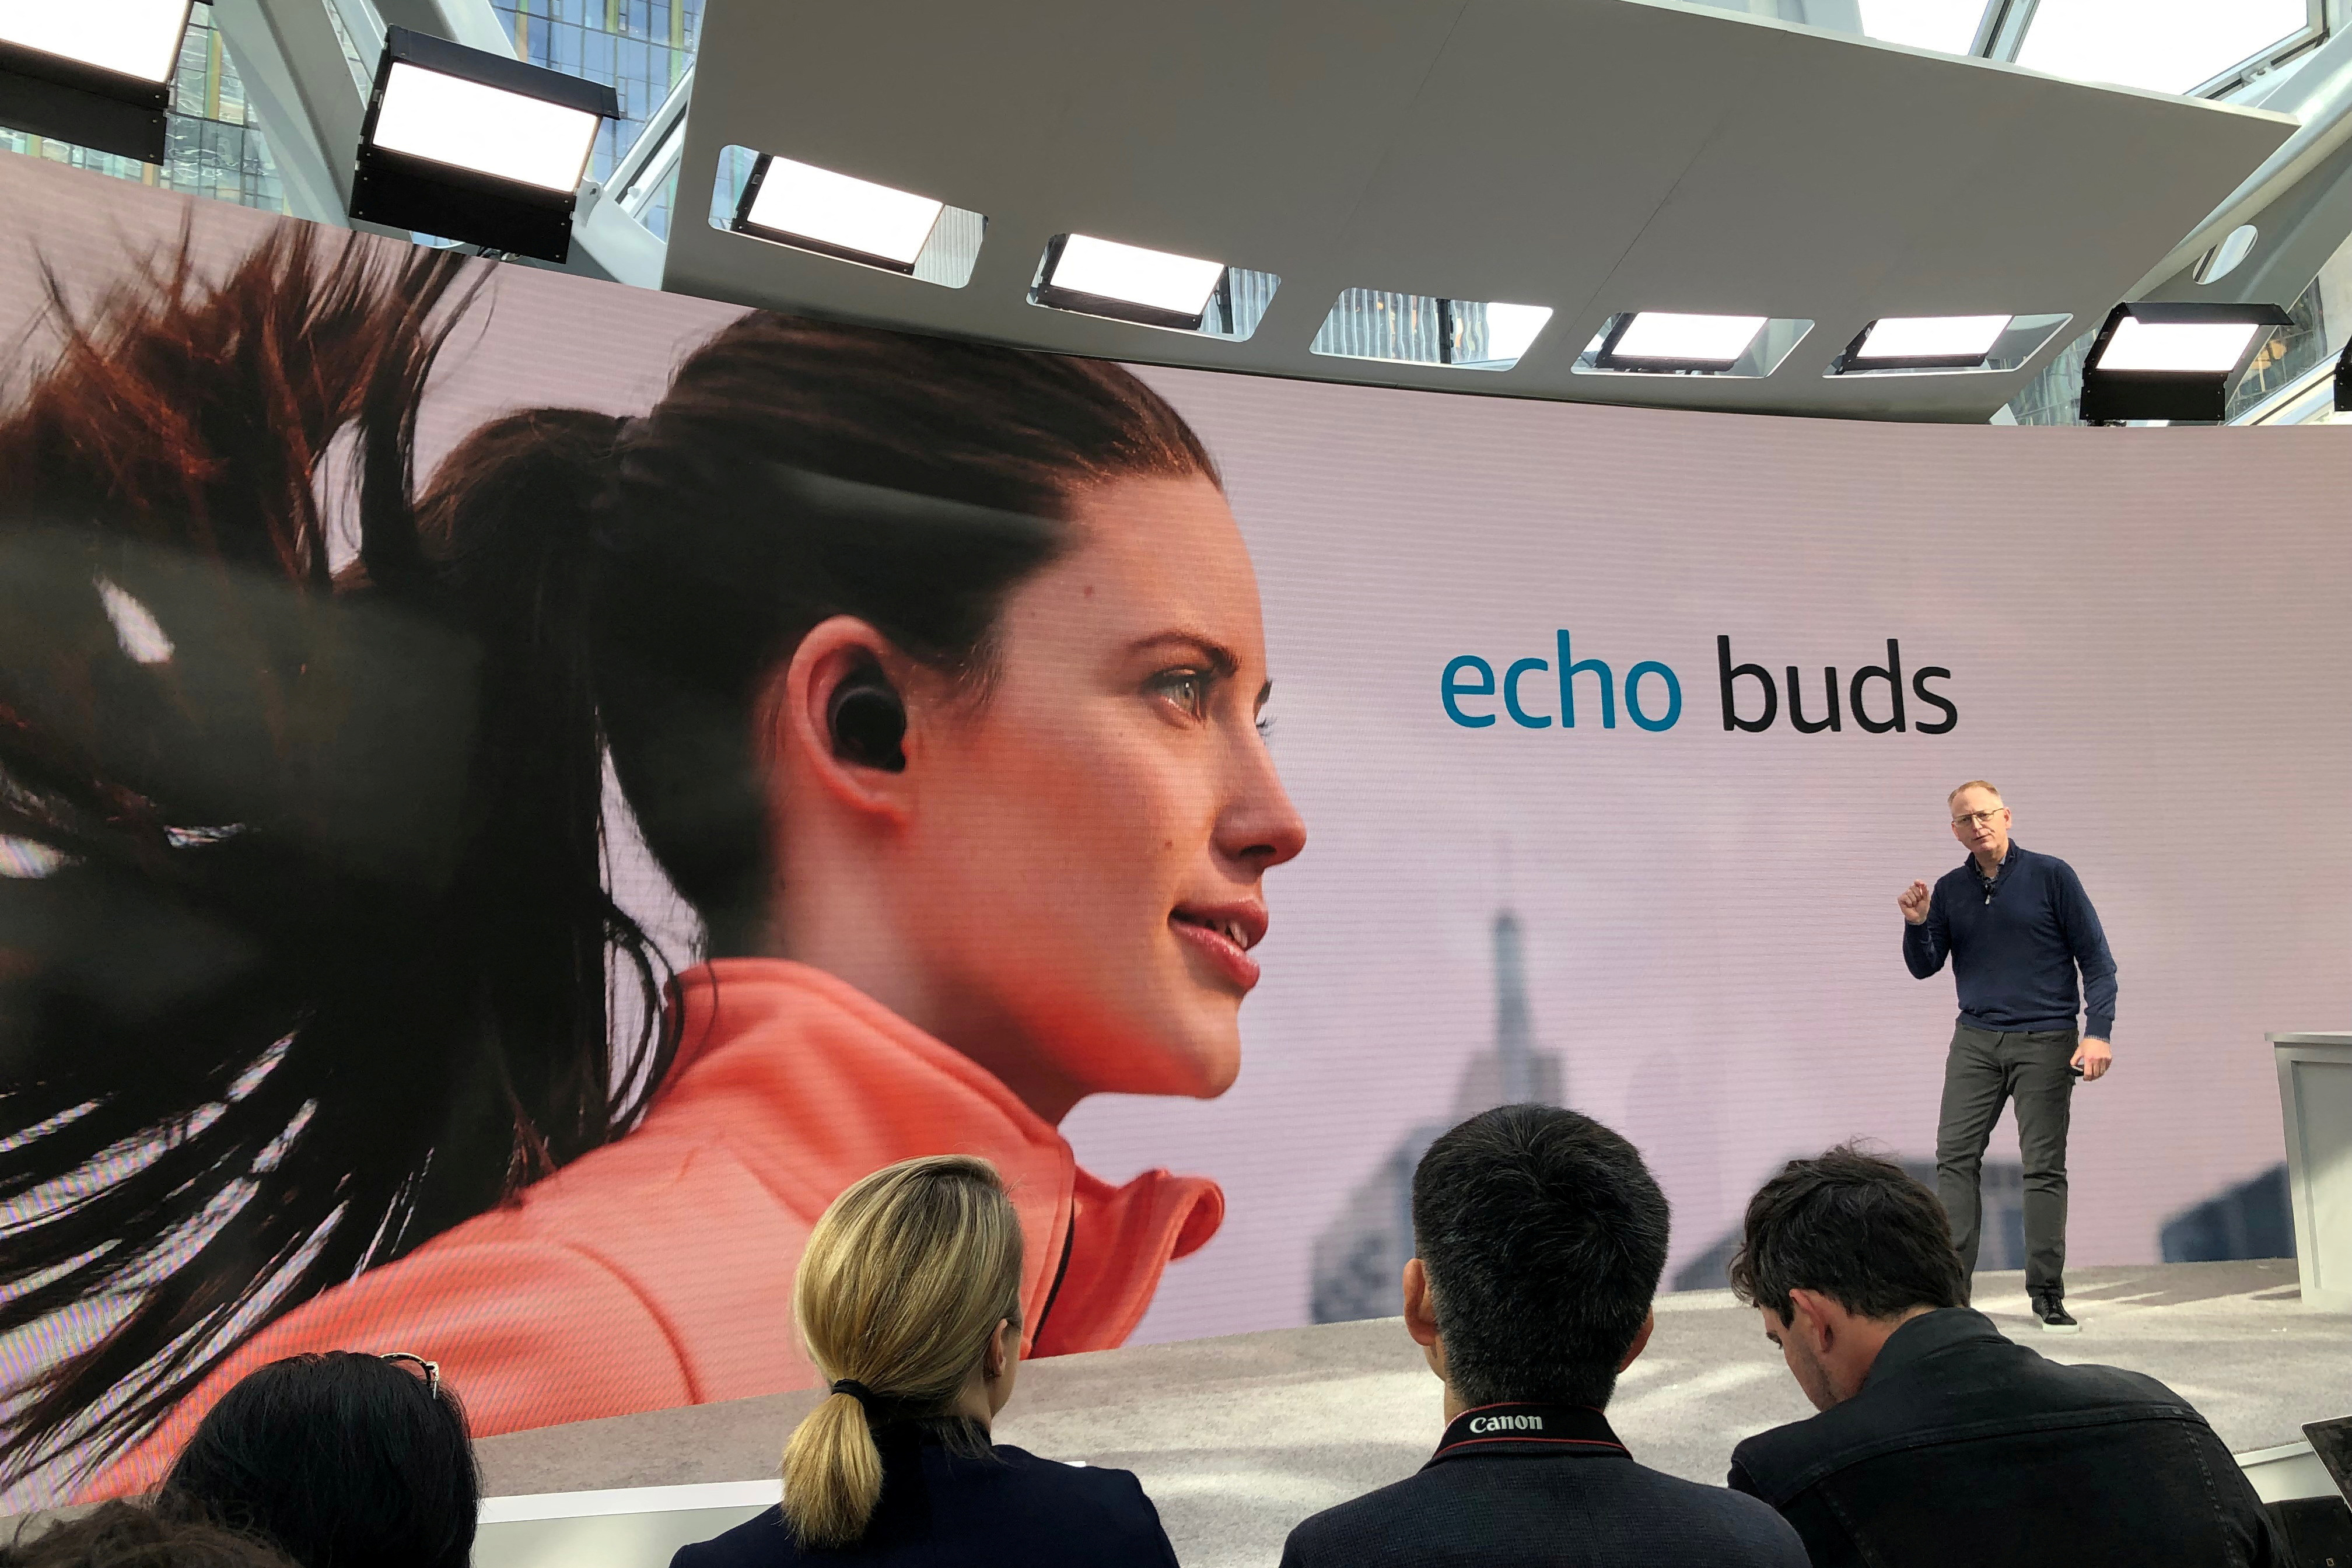 Amazon Senior Vice President David Limp announces “Echo Buds” headphones in Seattle